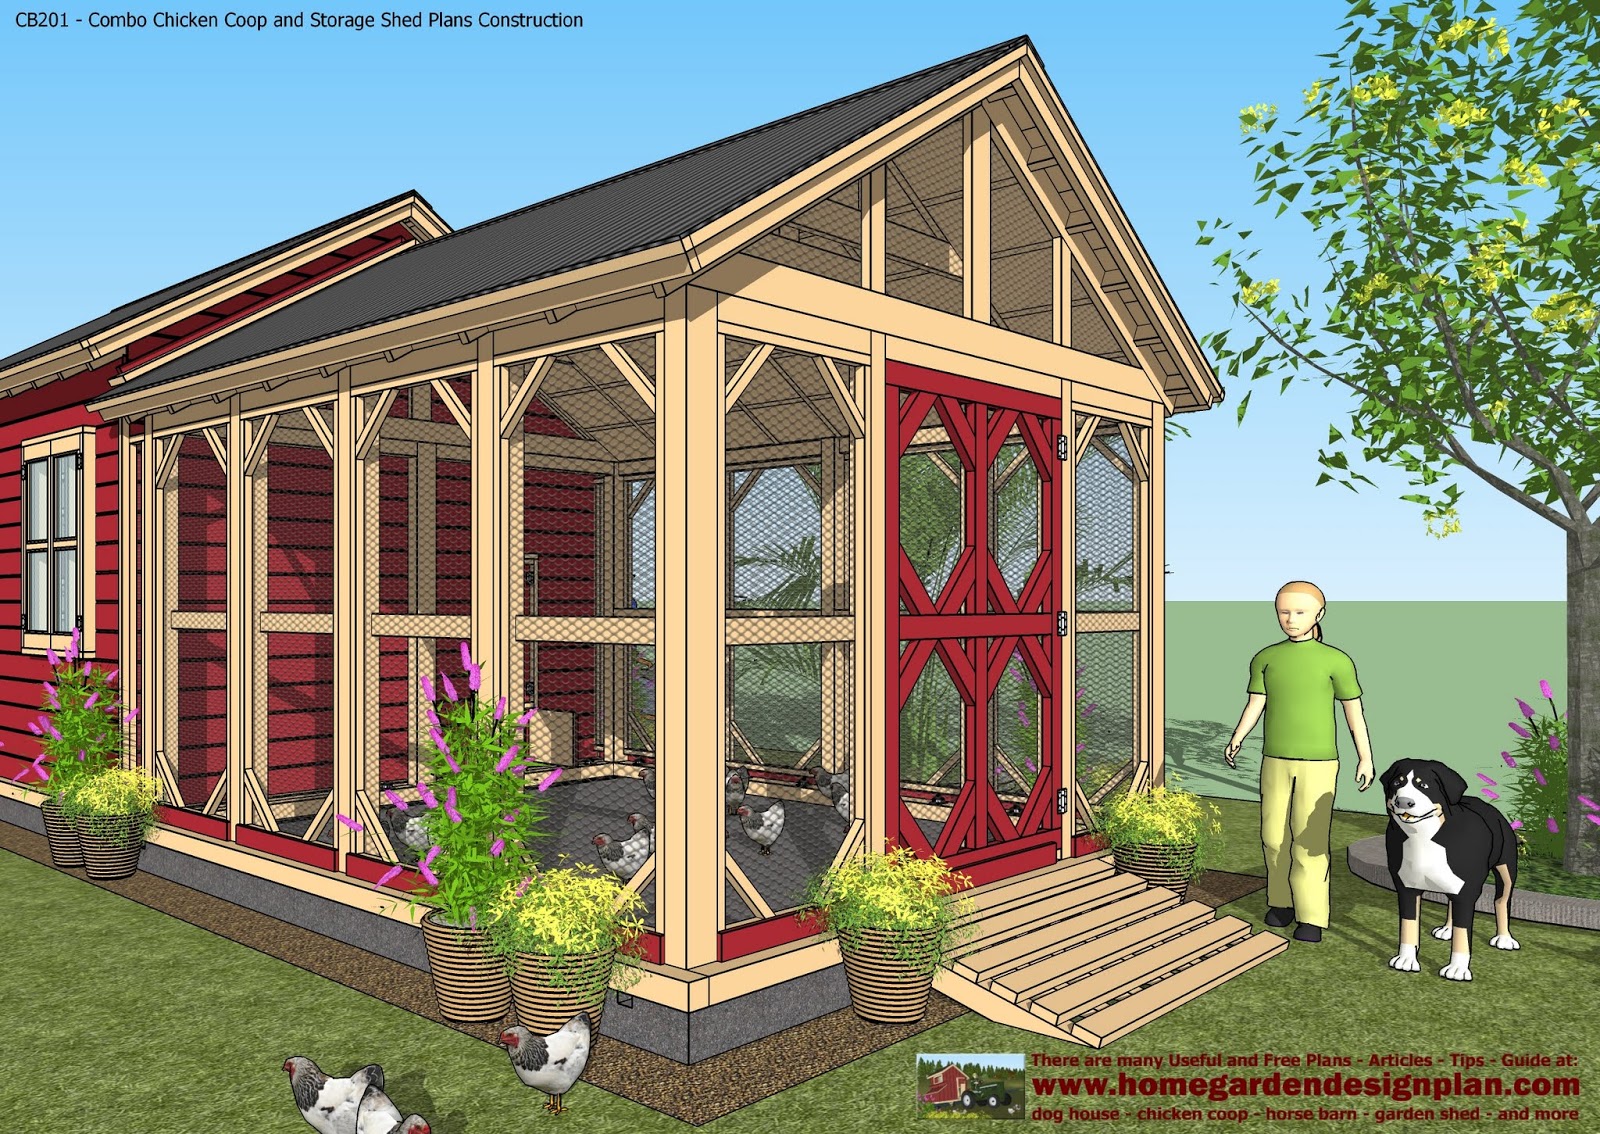 home garden plans: CB201 - Combo Plans - Chicken Coop Plans 